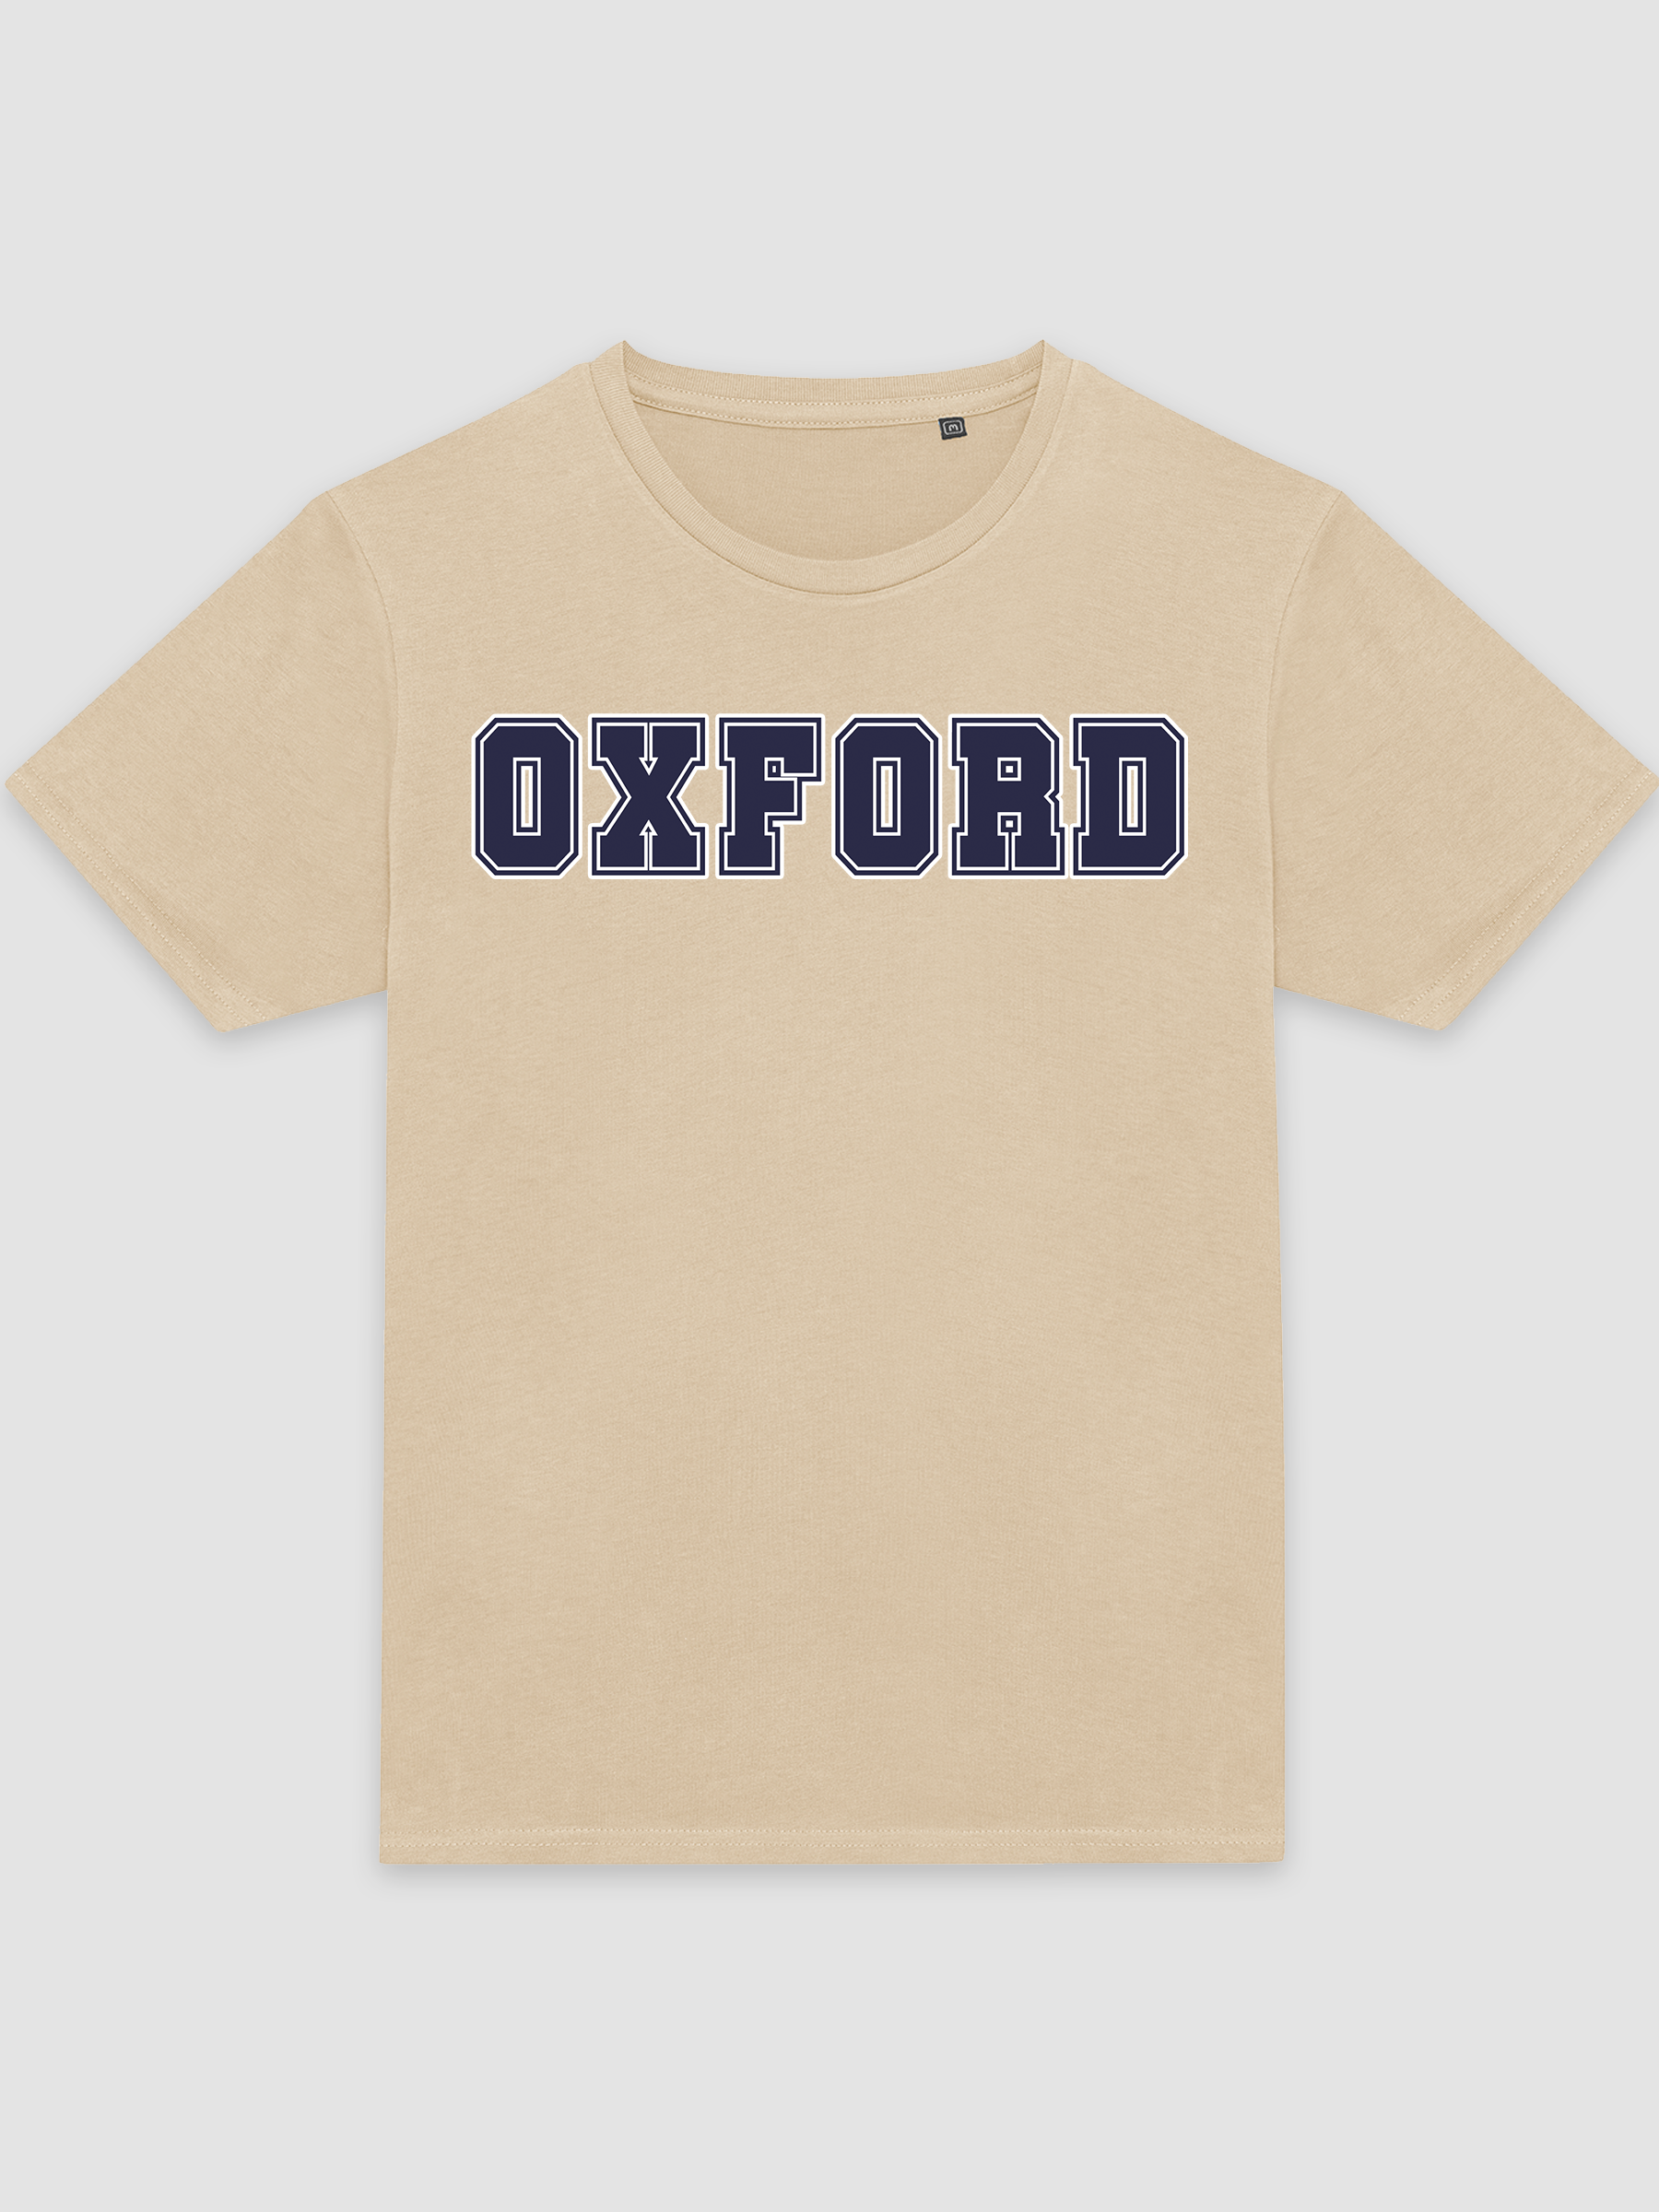 Oxford - Sand T-Shirt